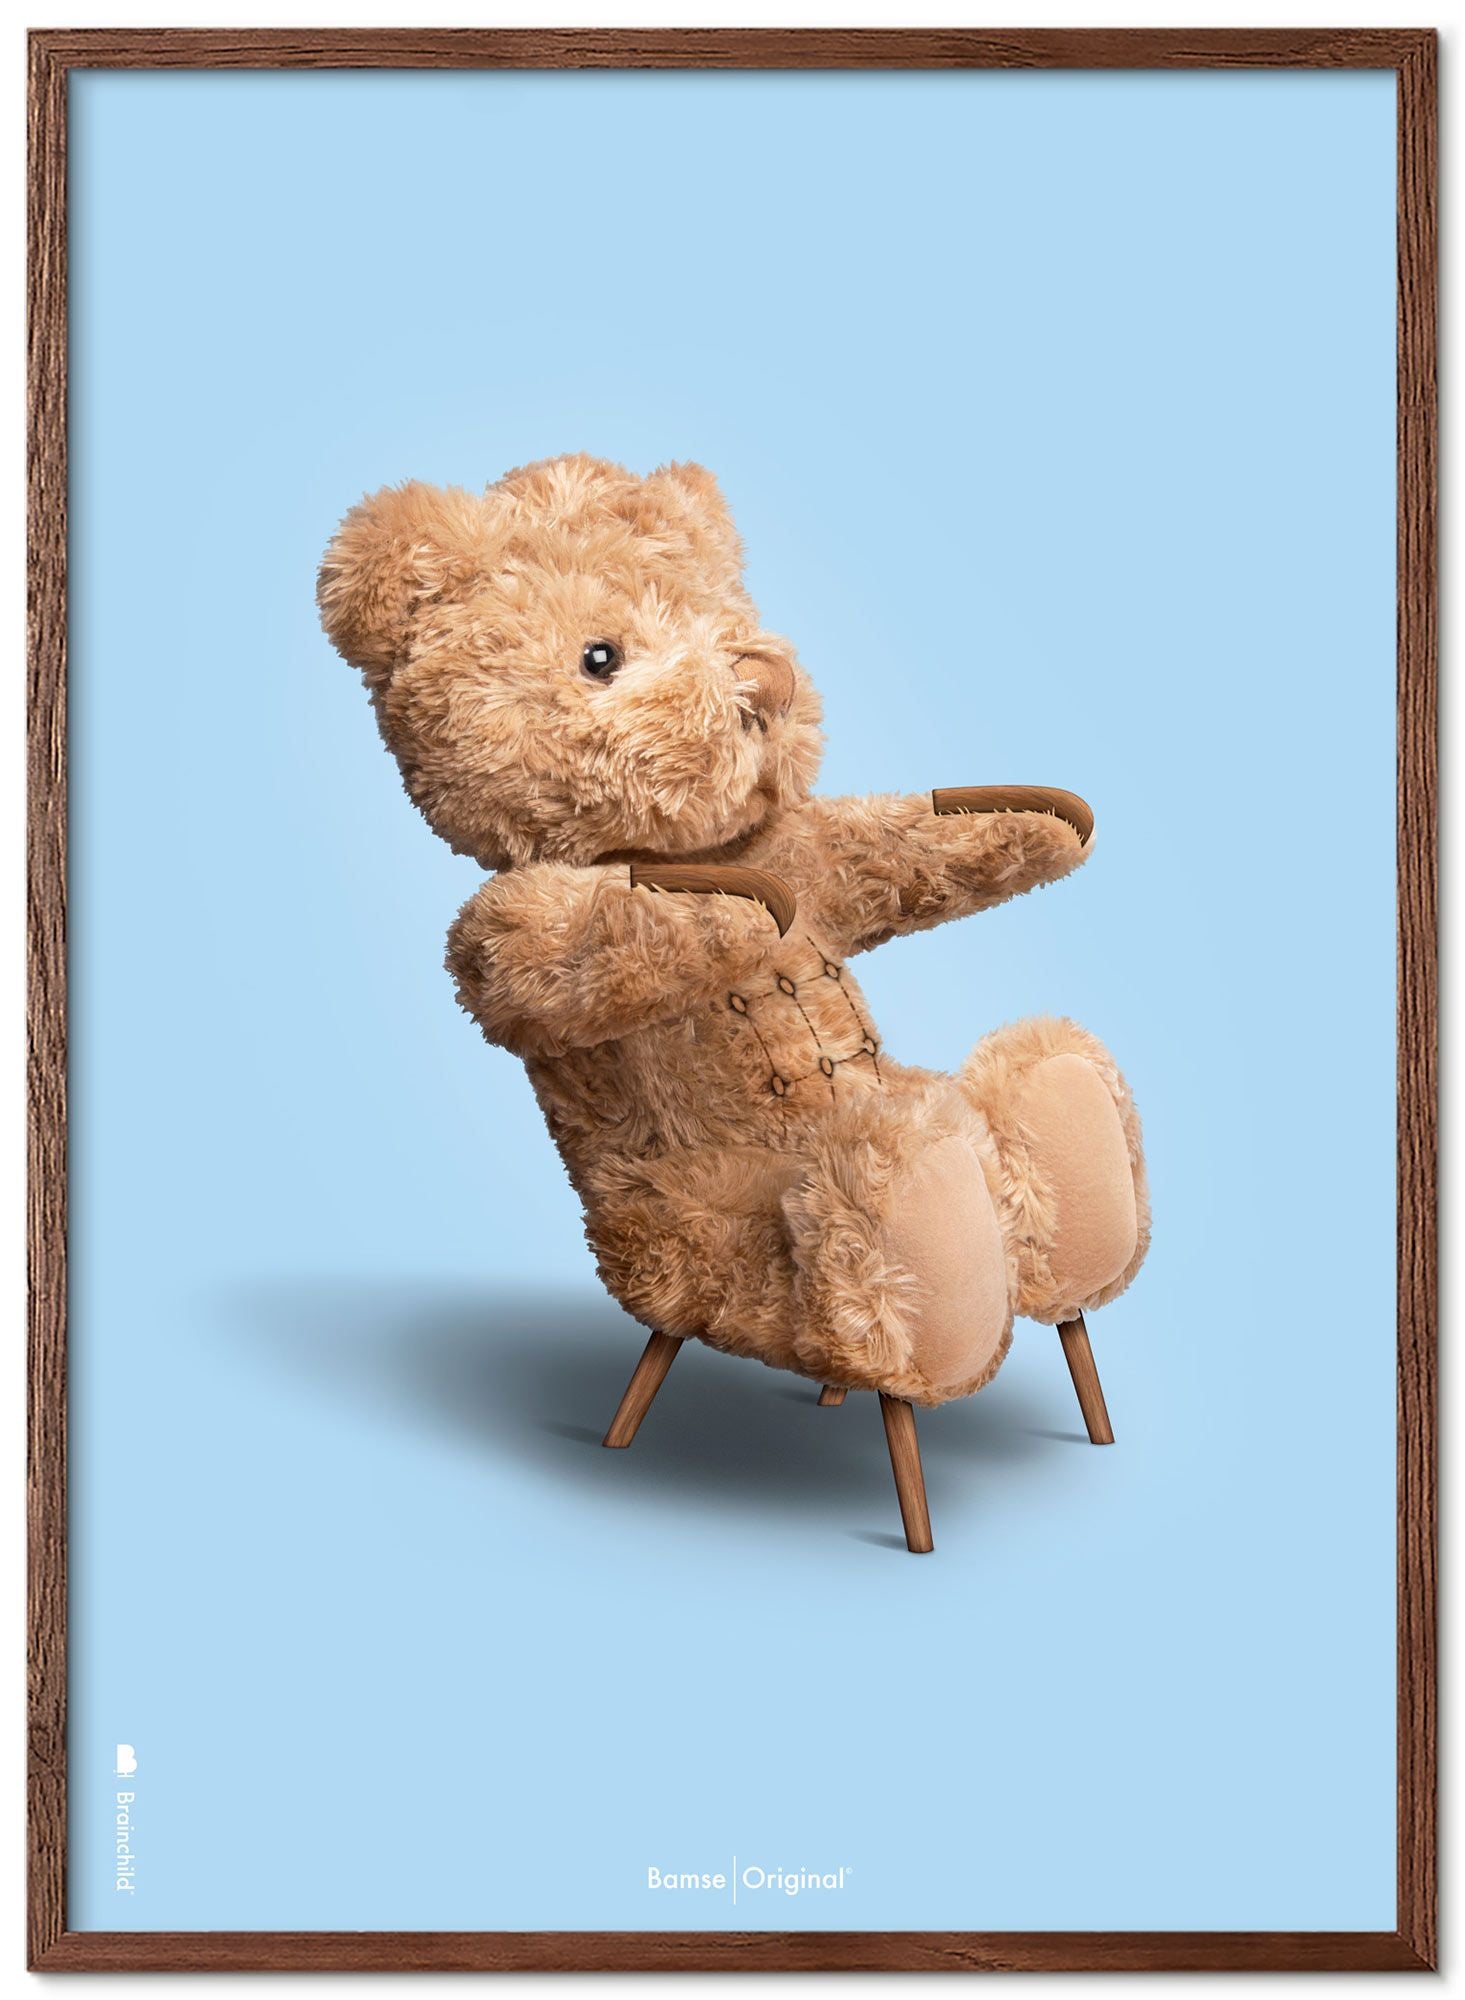 Brainchild Teddybeer klassiek poster frame gemaakt van donker hout ram 30x40 cm, lichtblauwe achtergrond